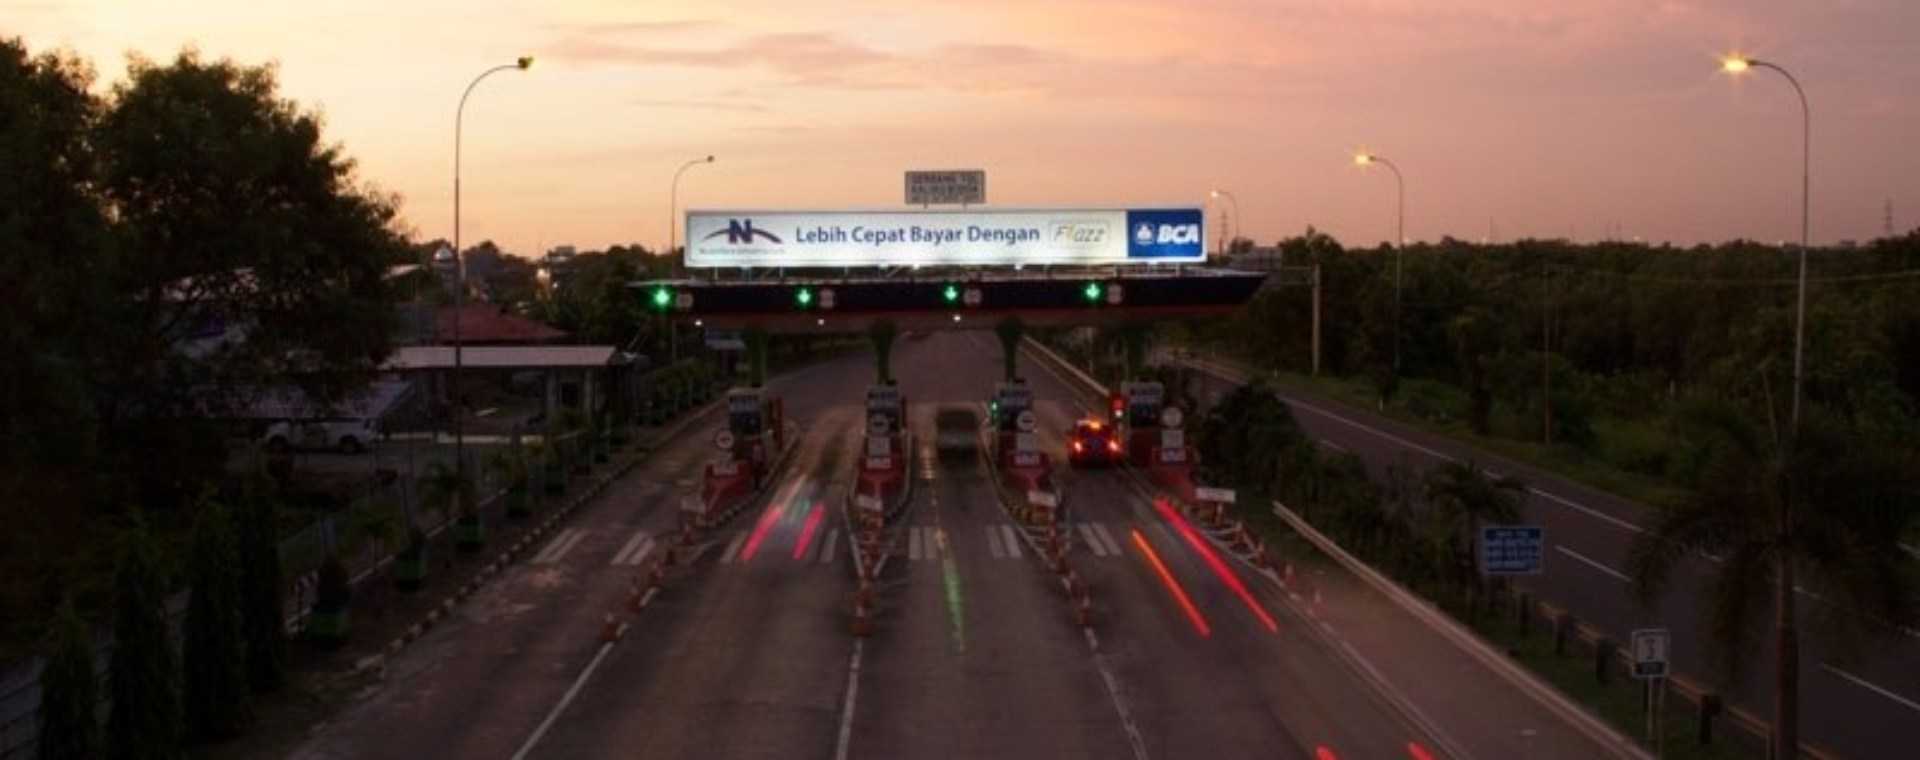 Jalan Tol Seksi Empat, Makassar, salah satu jalan tol yang dikelola PT JTSE, anak usaha PT Nusantara Infrastructure. - nusantarainfrastructure.com